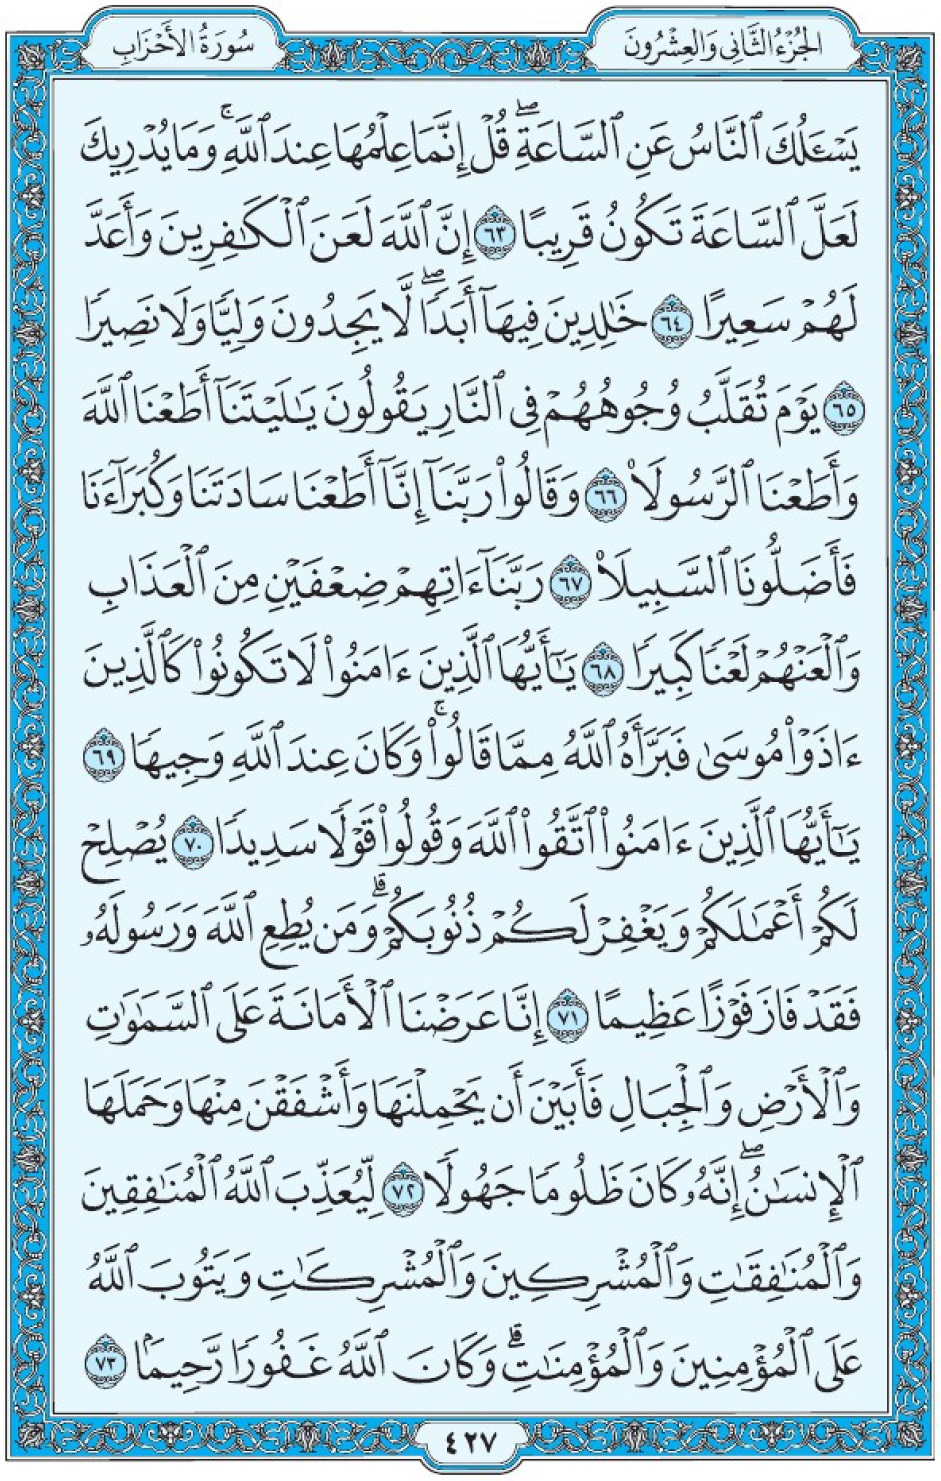 Коран Мединский мусхаф страница 427, Аль-Ахзаб, аят 63-73